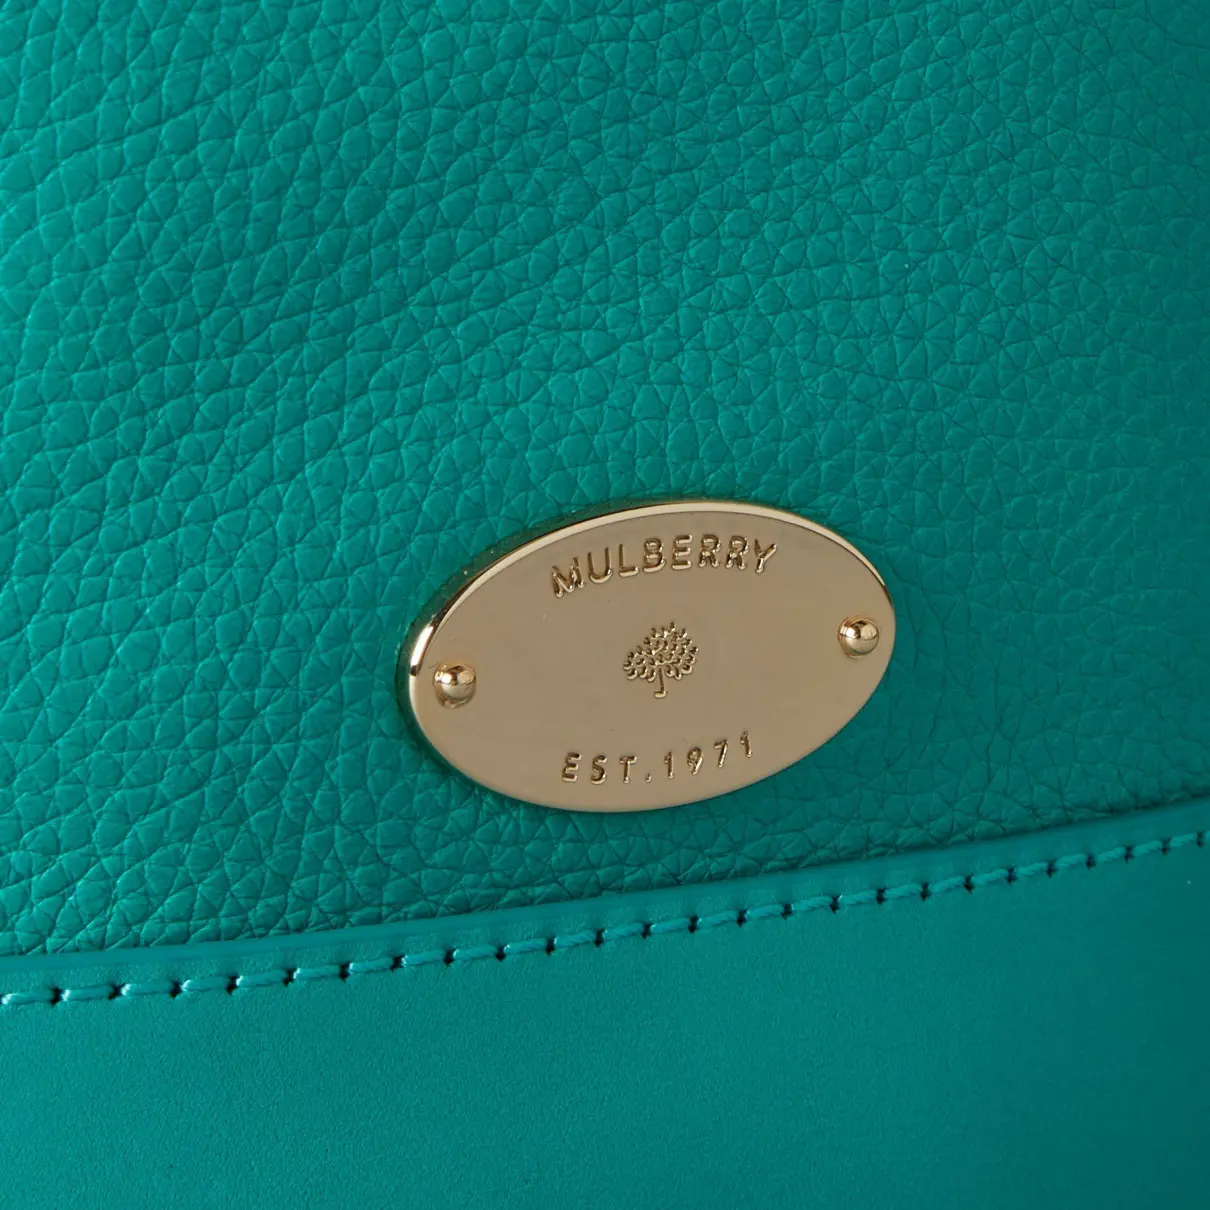 Jamie leather handbag Mulberry